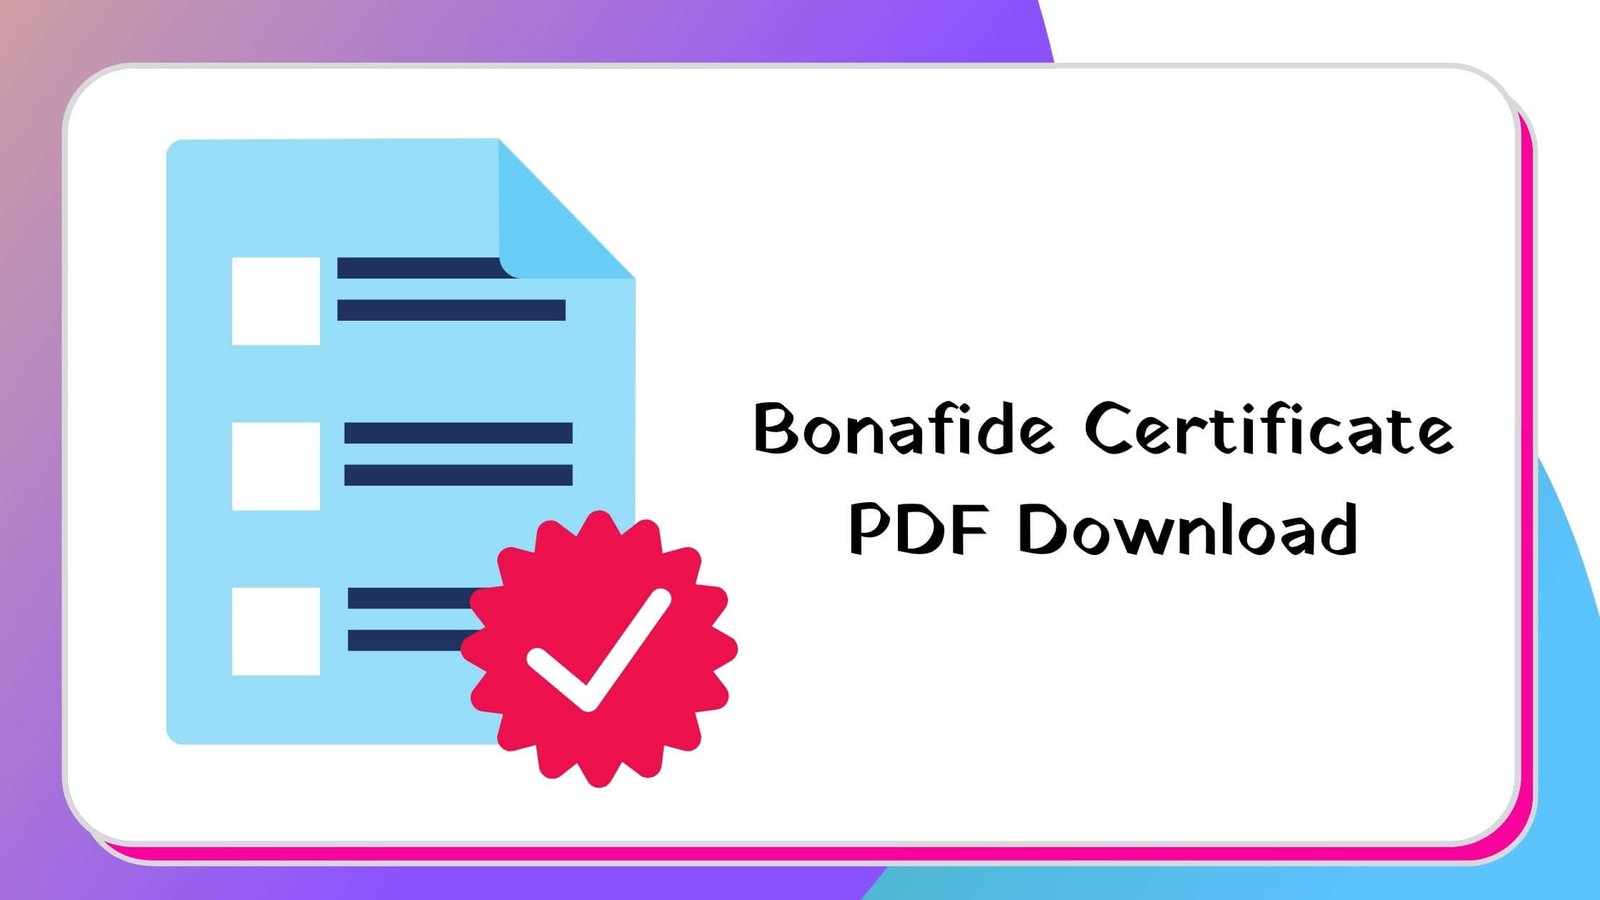 Bonafide Certificate PDF Download